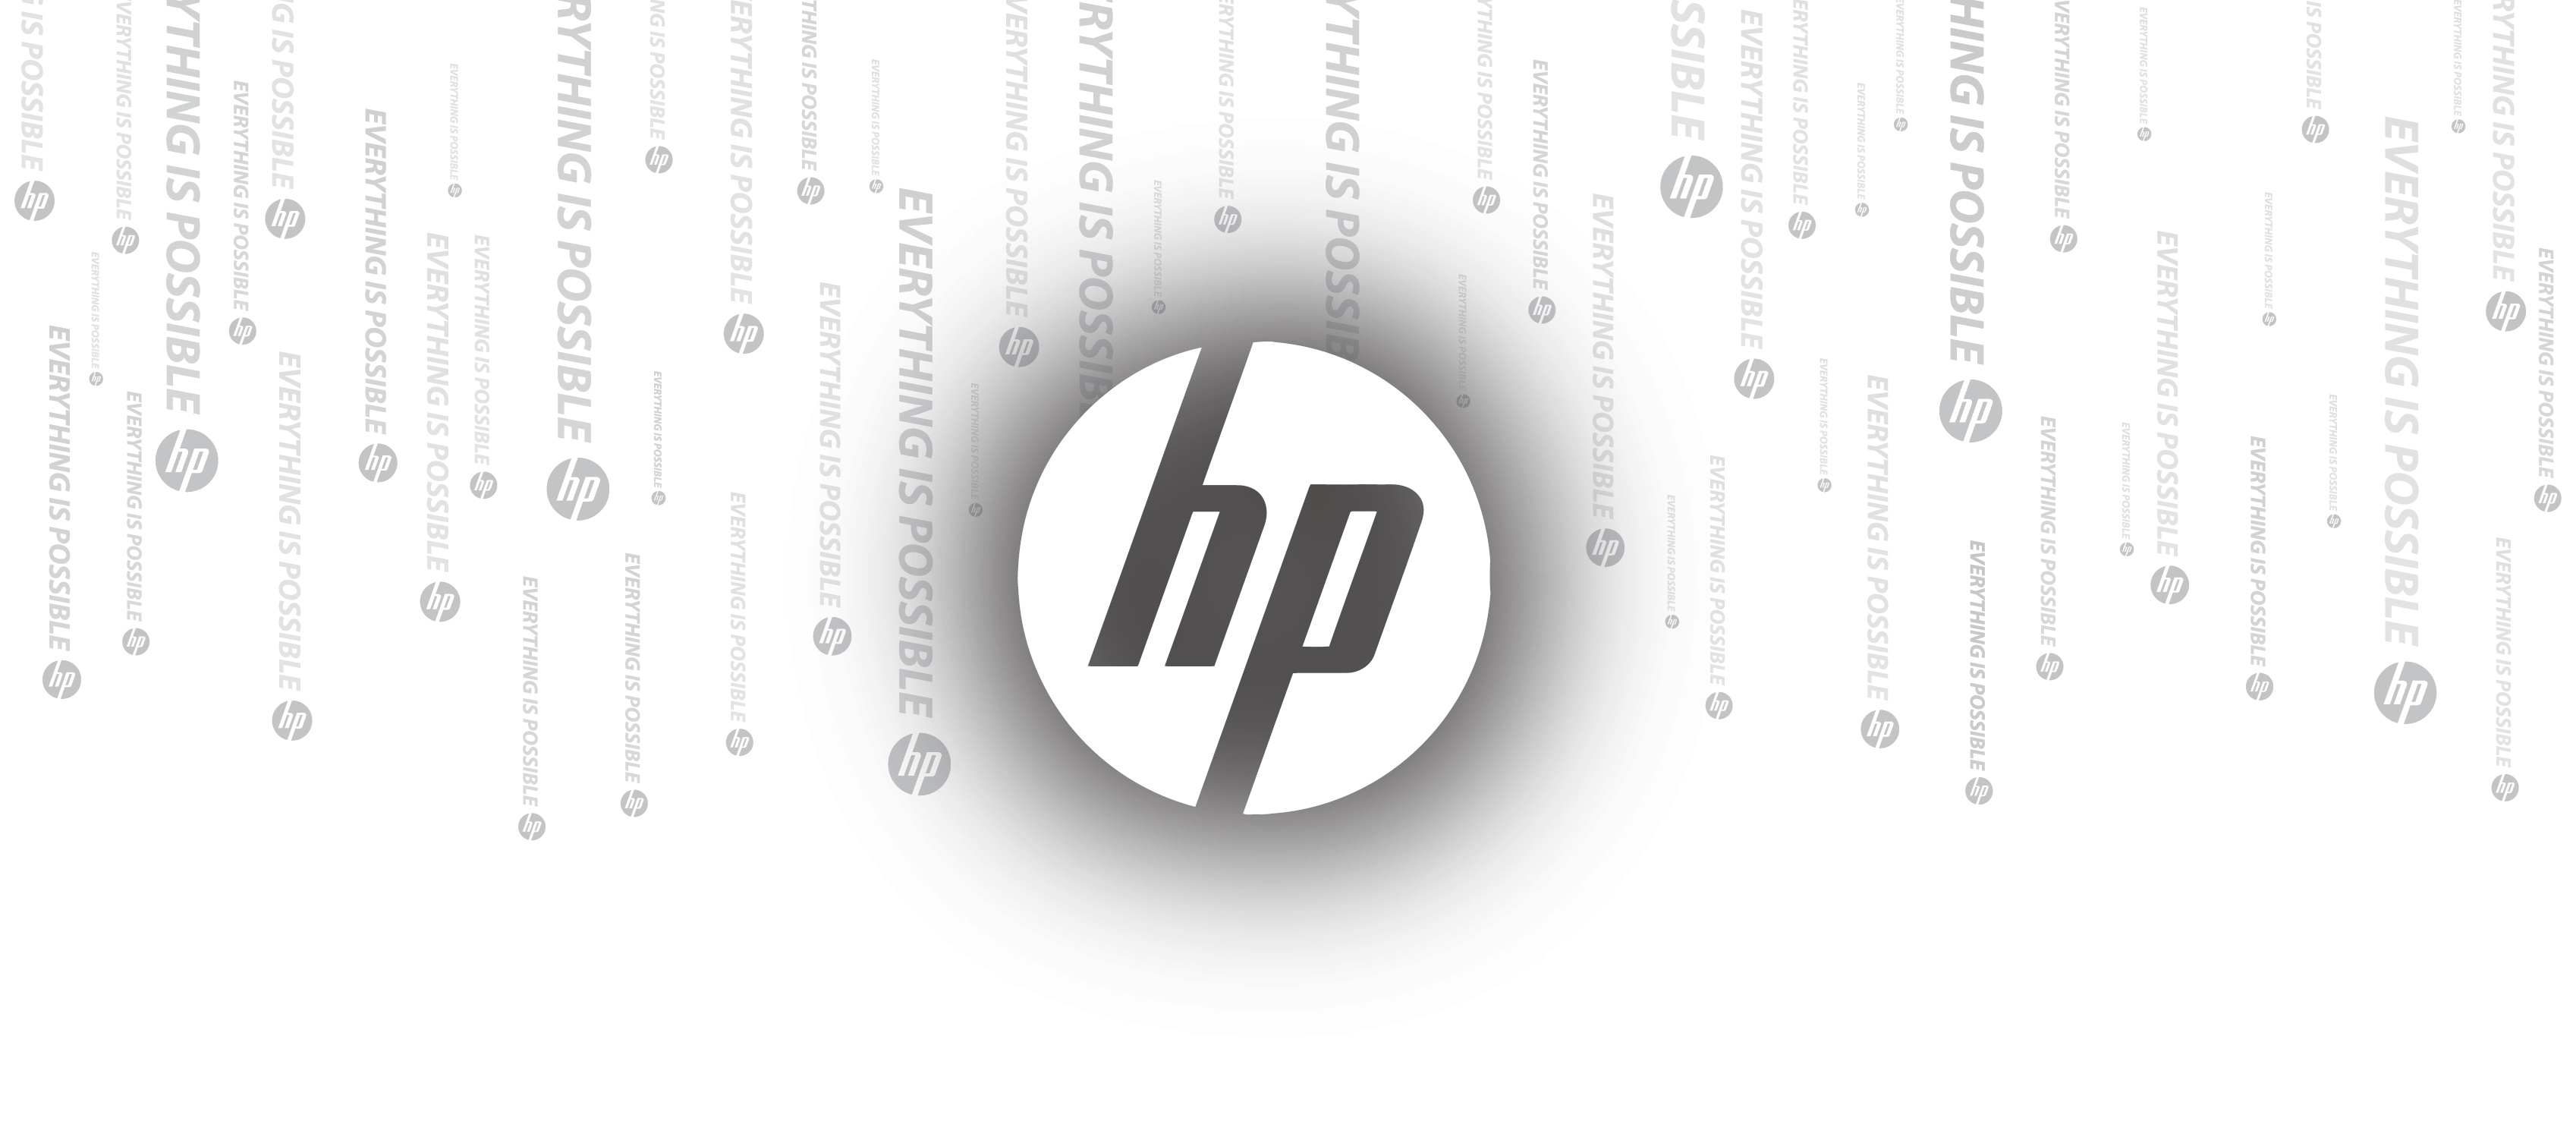 New HP logo, Innovative design, Kiran9614's creation, HP rebranding, 3400x1480 Dual Screen Desktop